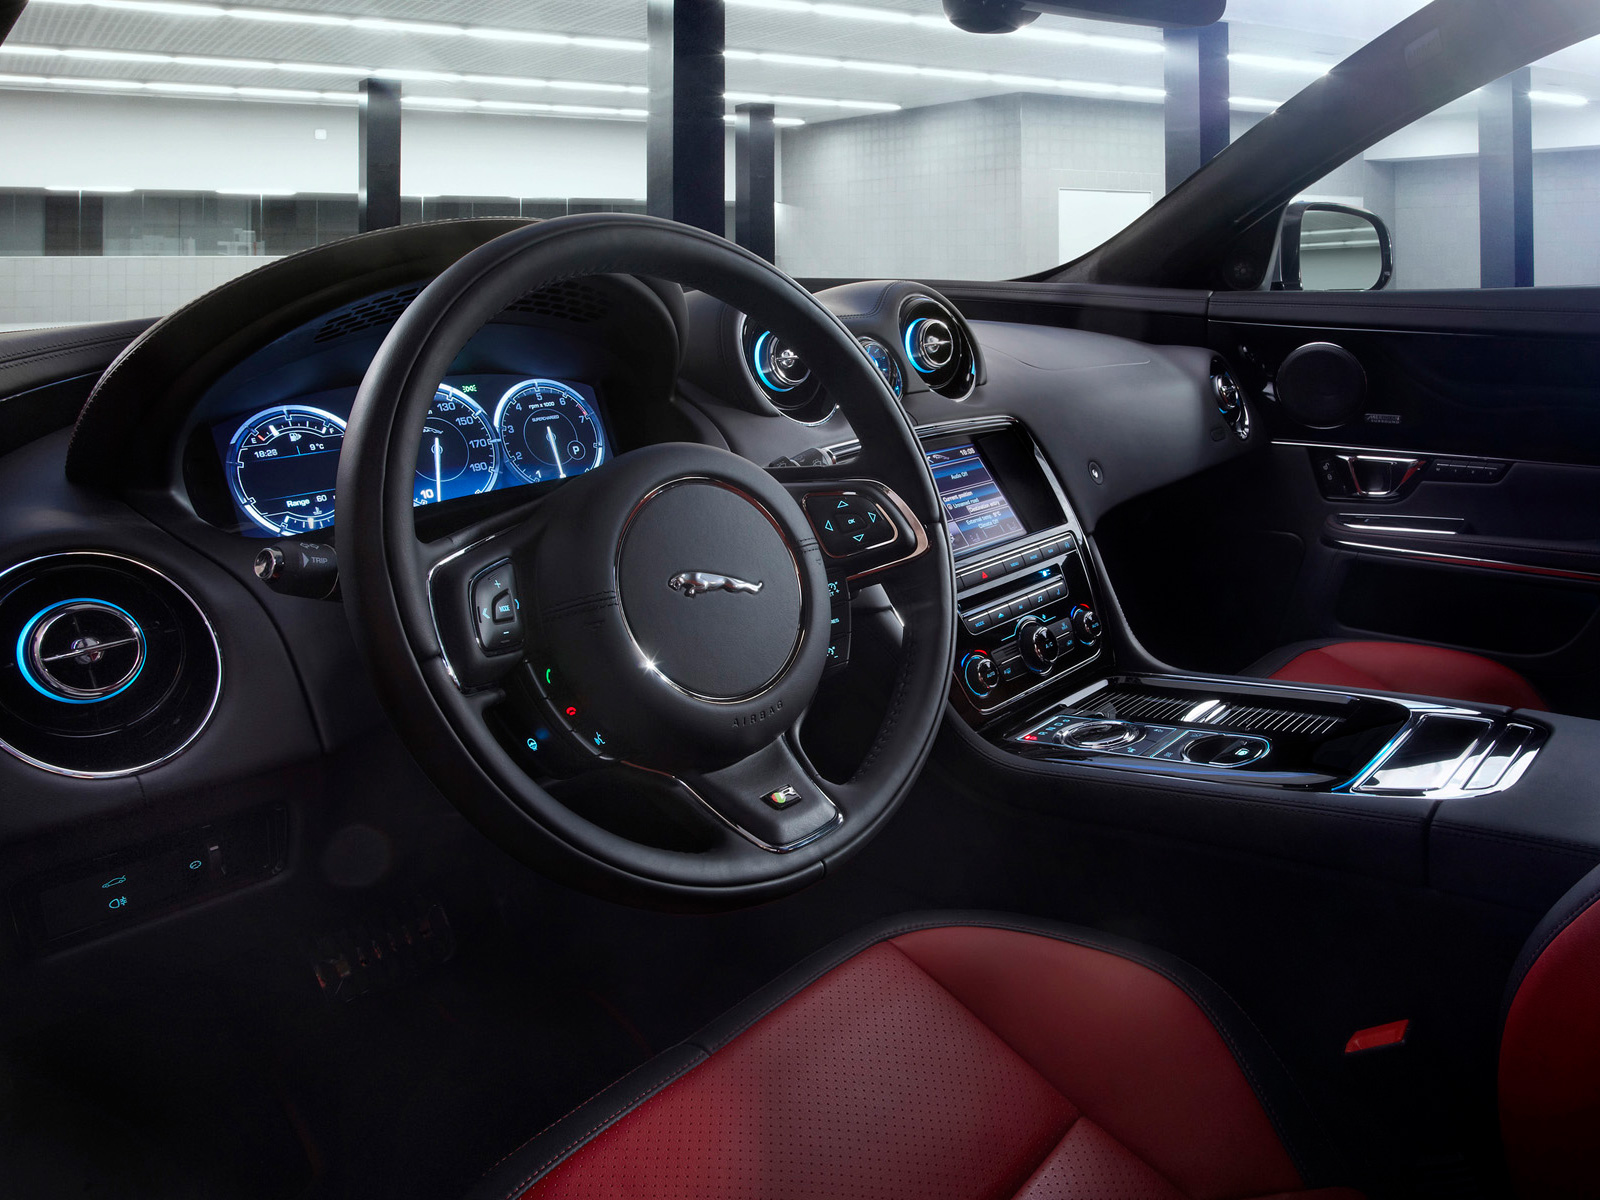 International, 2013-Jaguar-XJR-Interior: New XJR 2013, Sedan Mewah Terbaru Jaguar